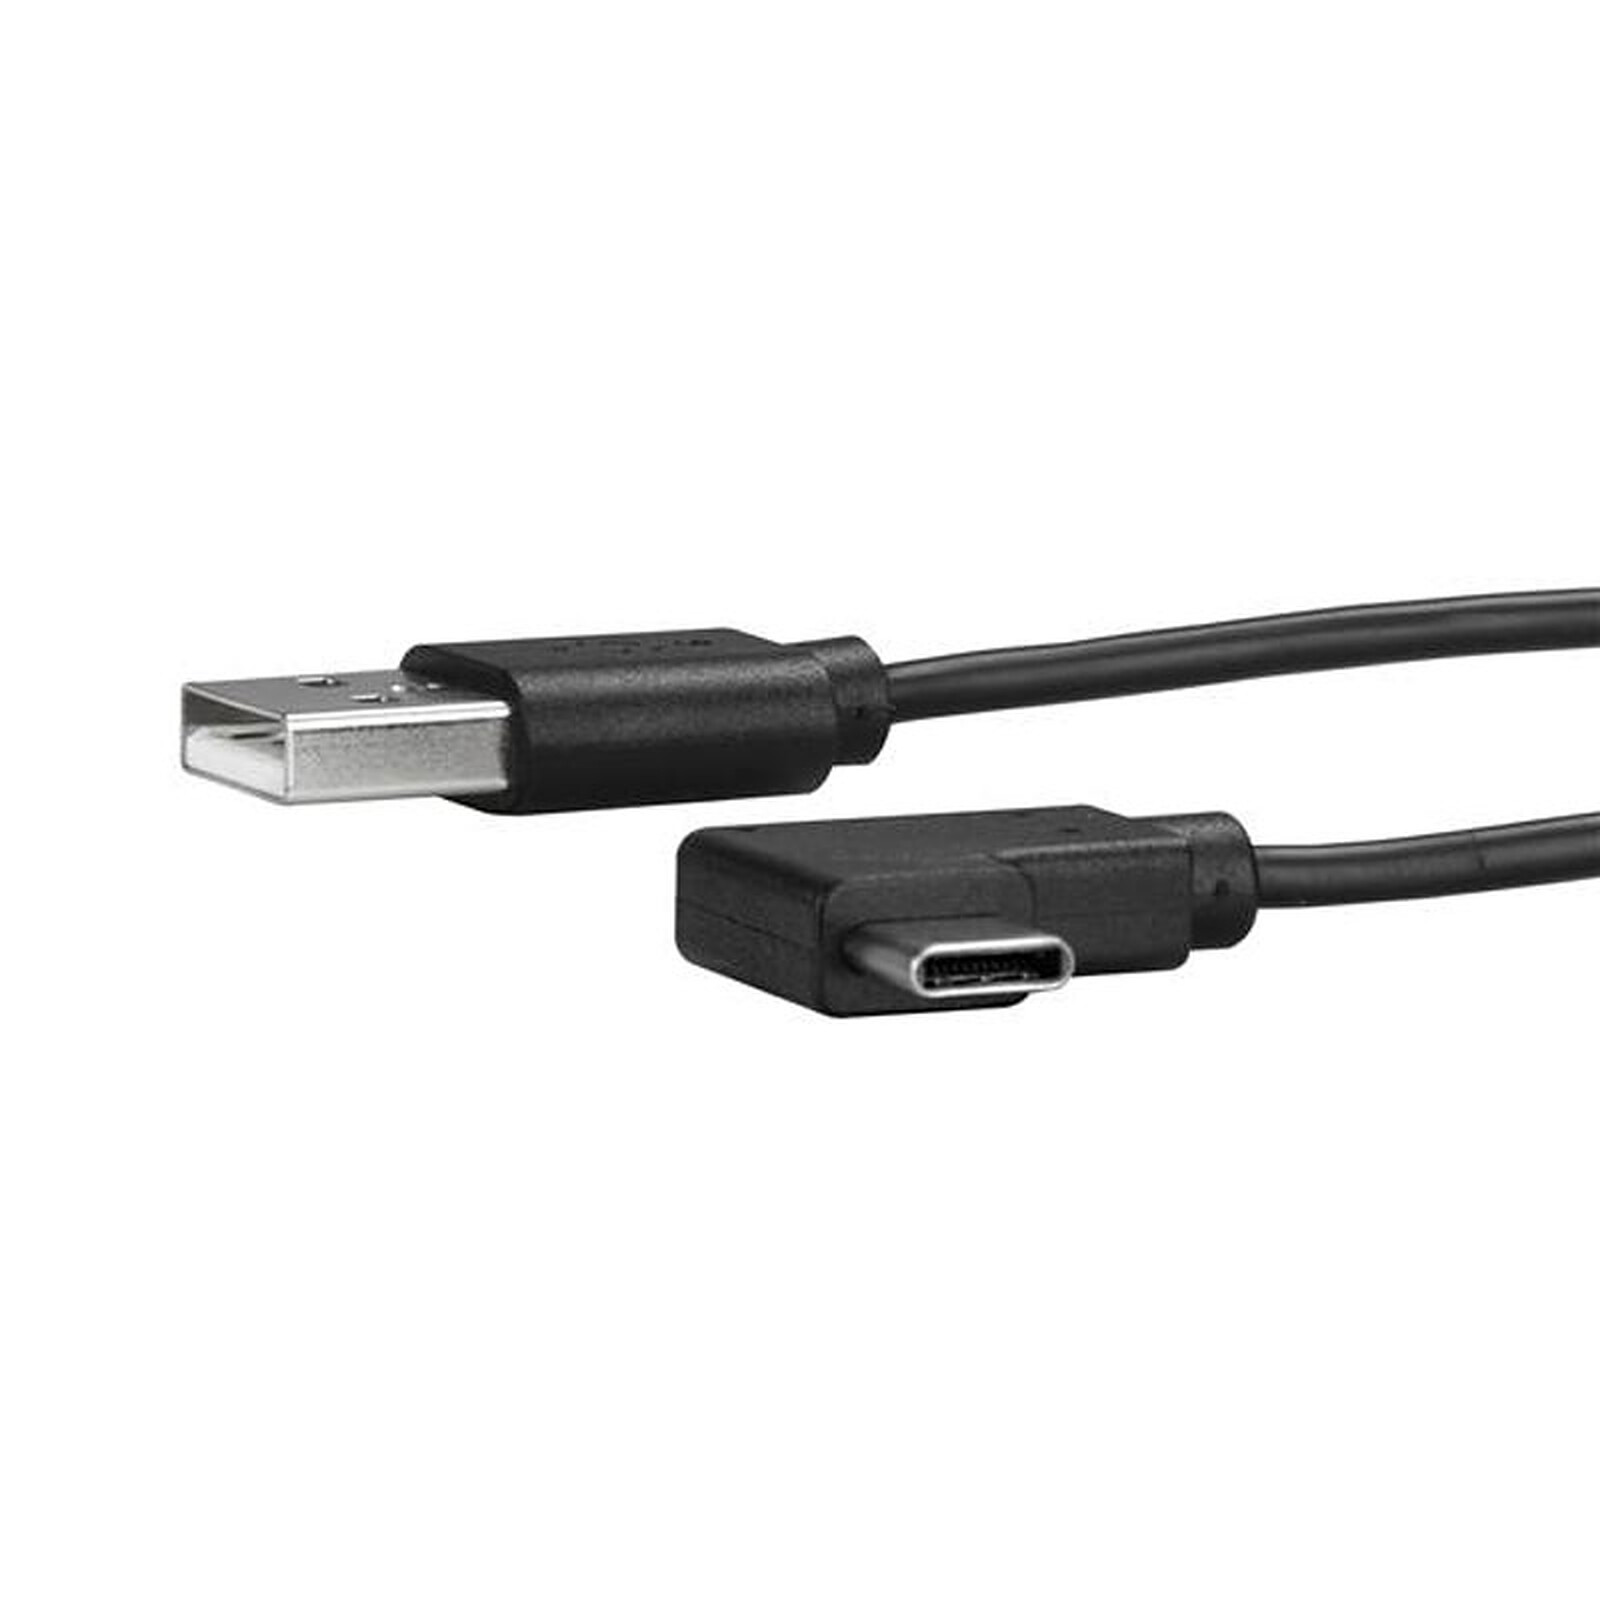 Cables USB GENERIQUE CABLING® Cordon USB Type C (USB-C) vers Type